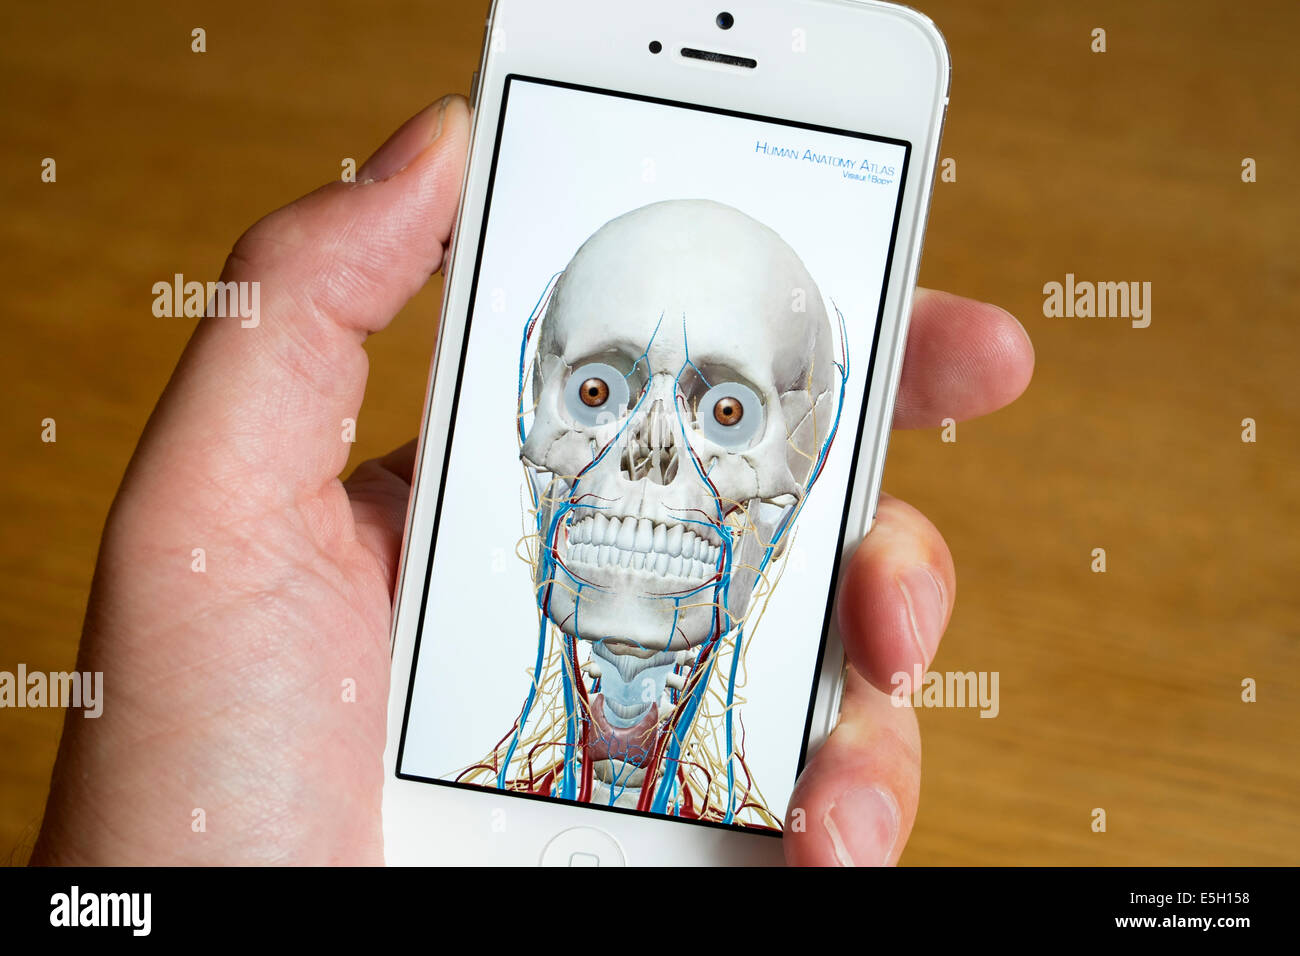 Using medical app to study human anatomy on an iPhone smart phone Stock  Photo - Alamy